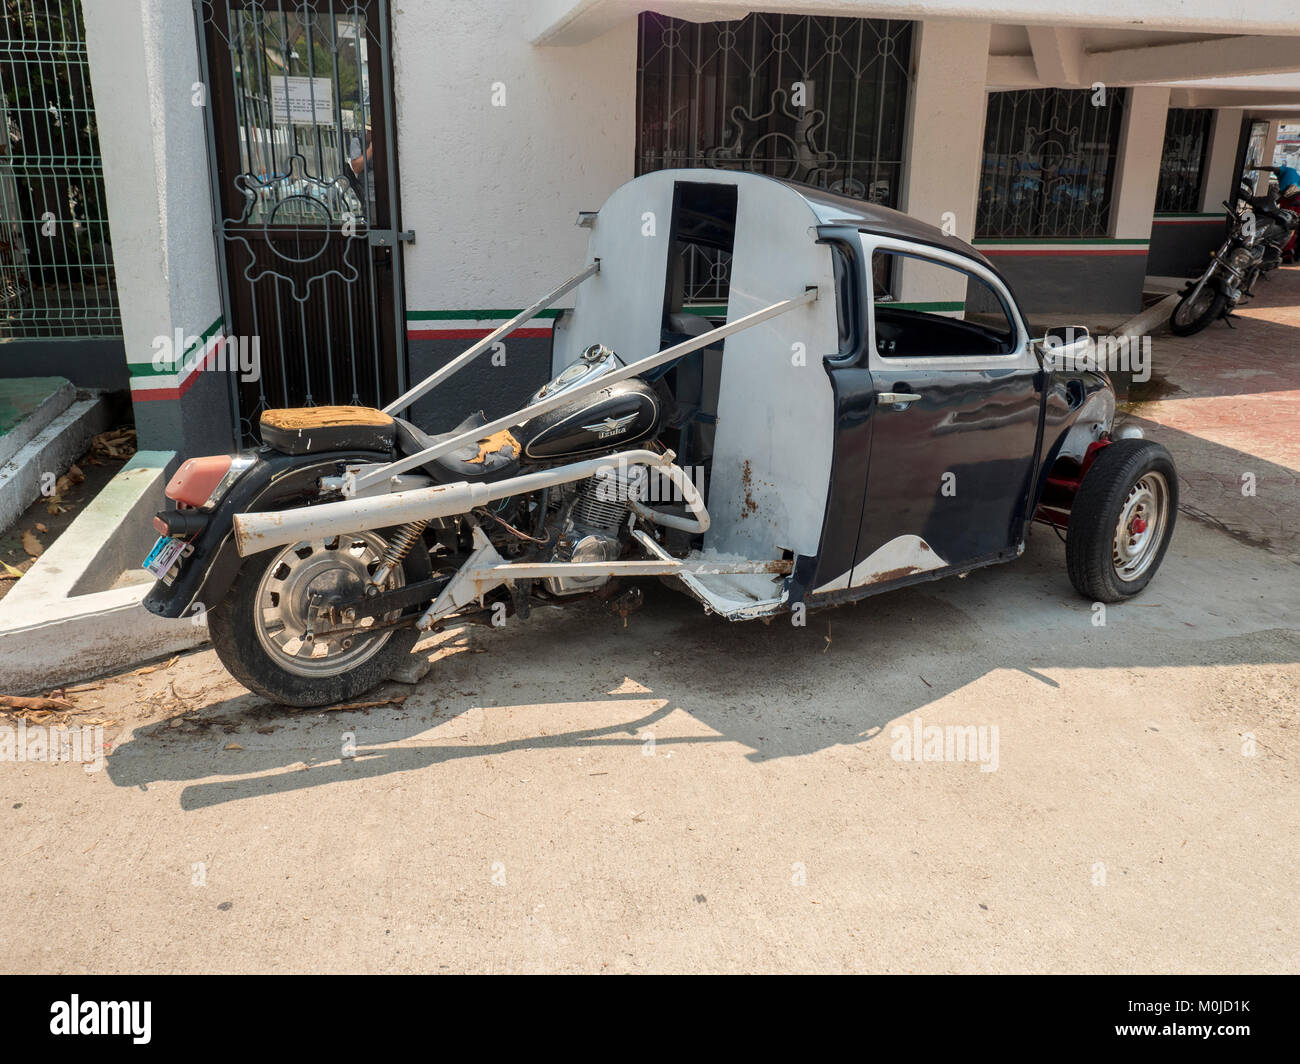 A One Off Custom Motorbike And Vintage Car Made Into One Three Wheeled Vehicle Motorcycle Izuka Santa Cruz Bay Mexico, Stock Photo